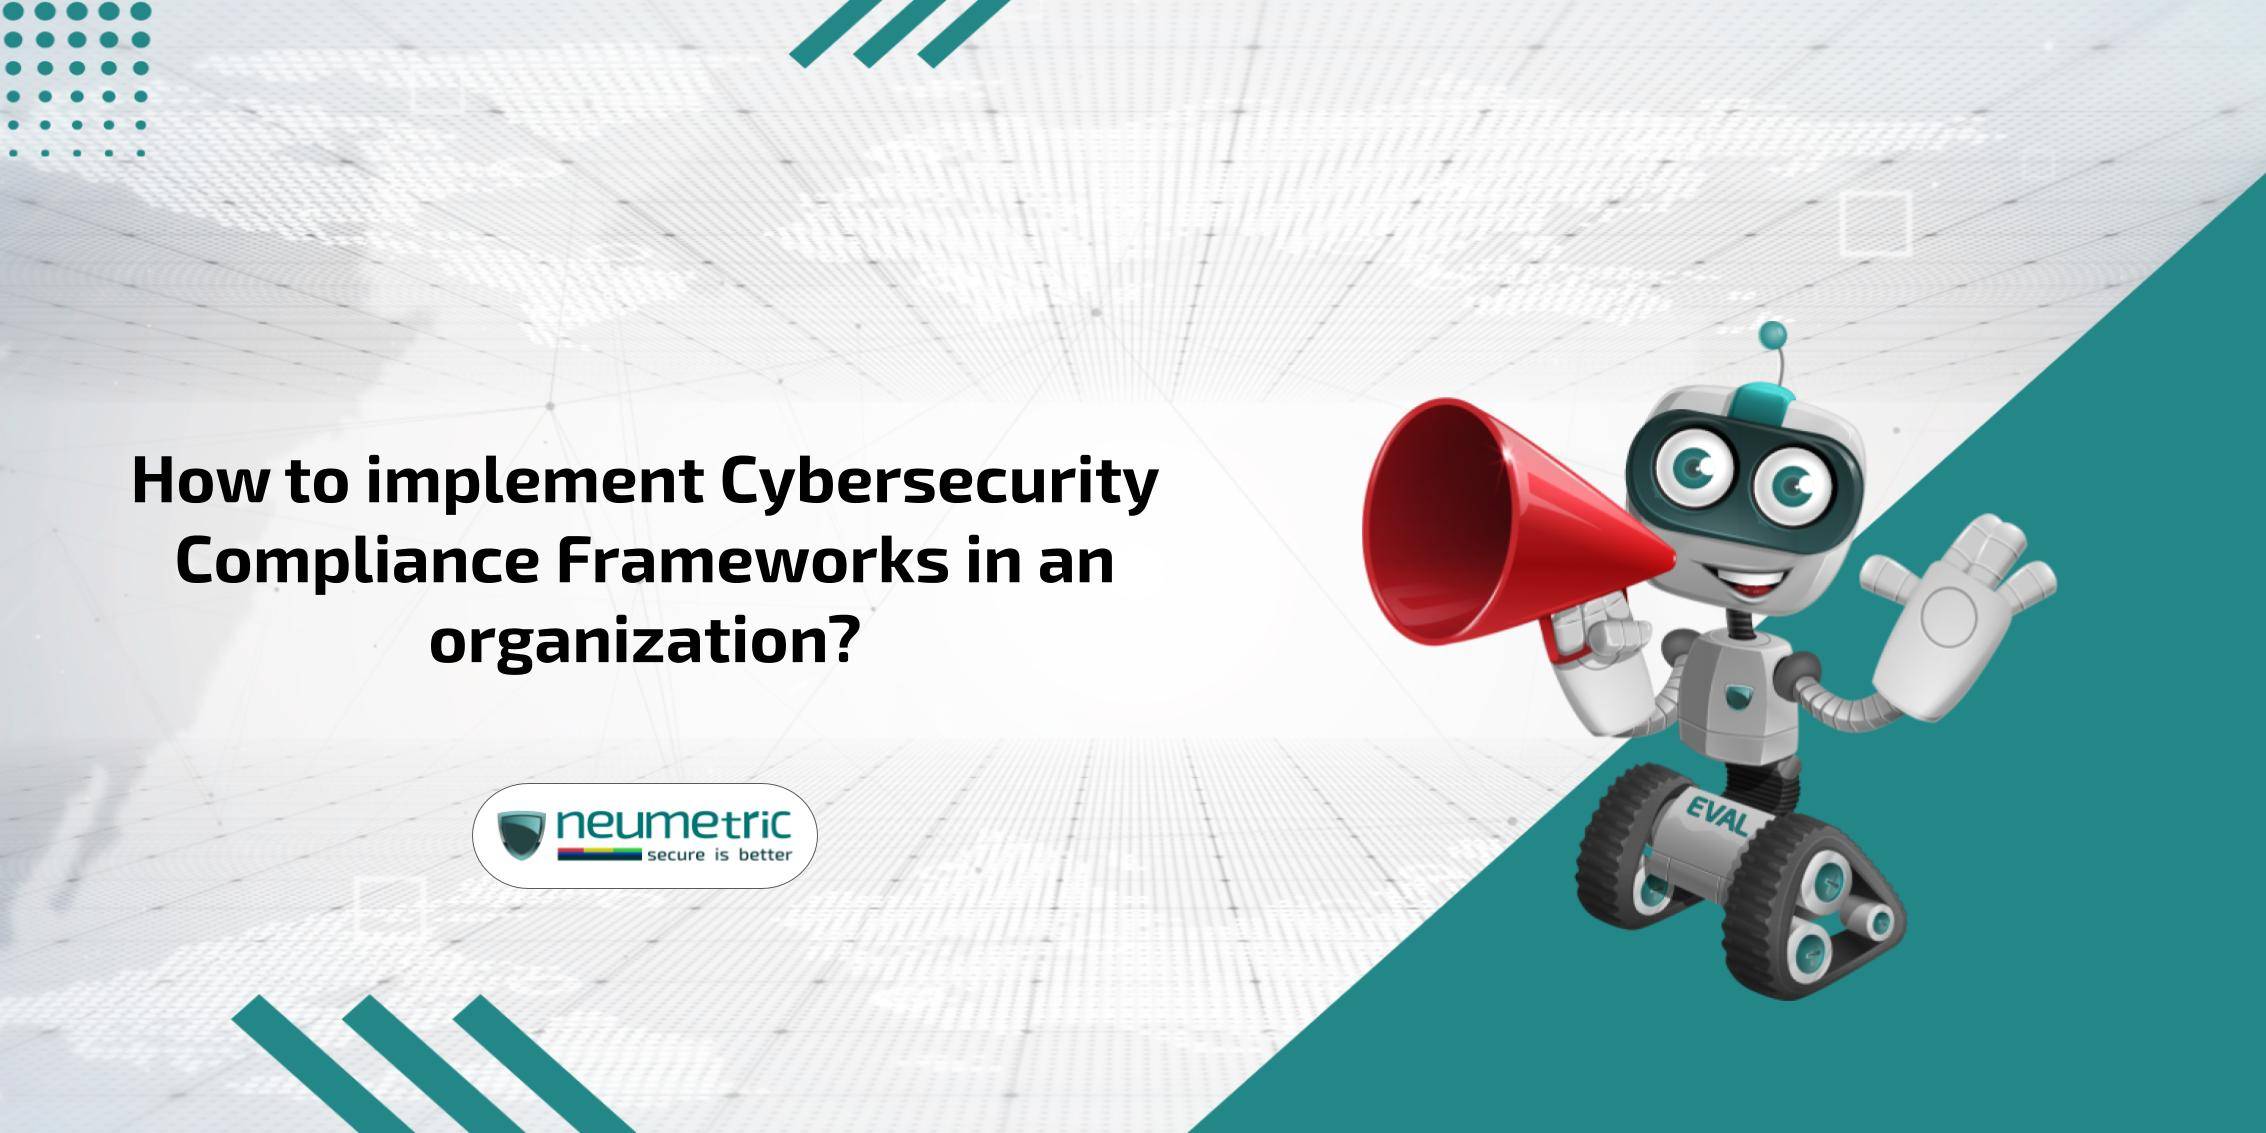 Cybersecurity compliance frameworks